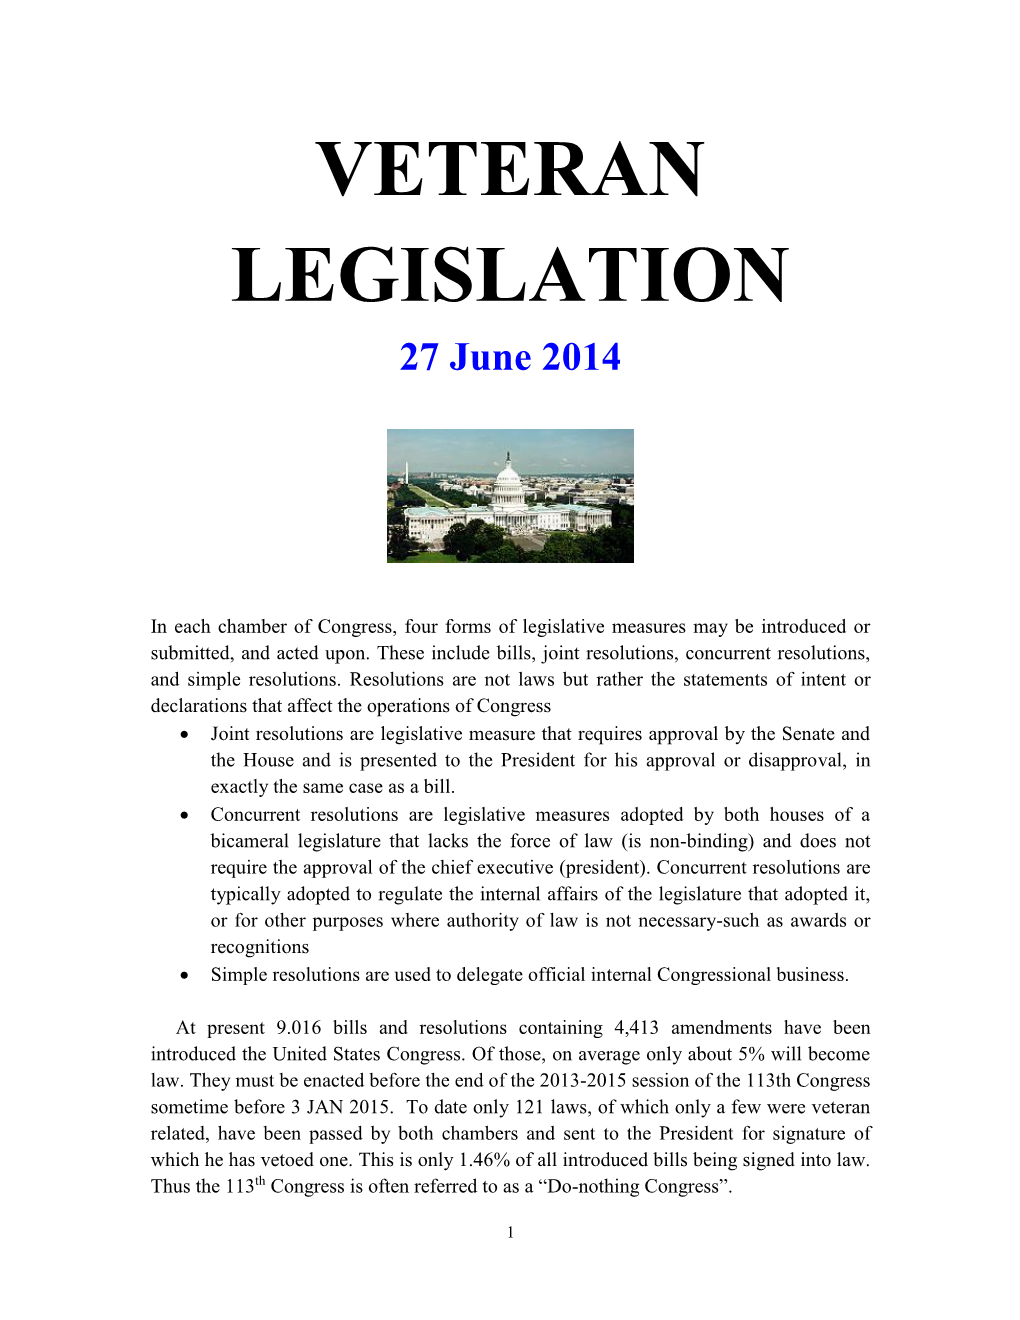 VETERAN LEGISLATION 27 June 2014